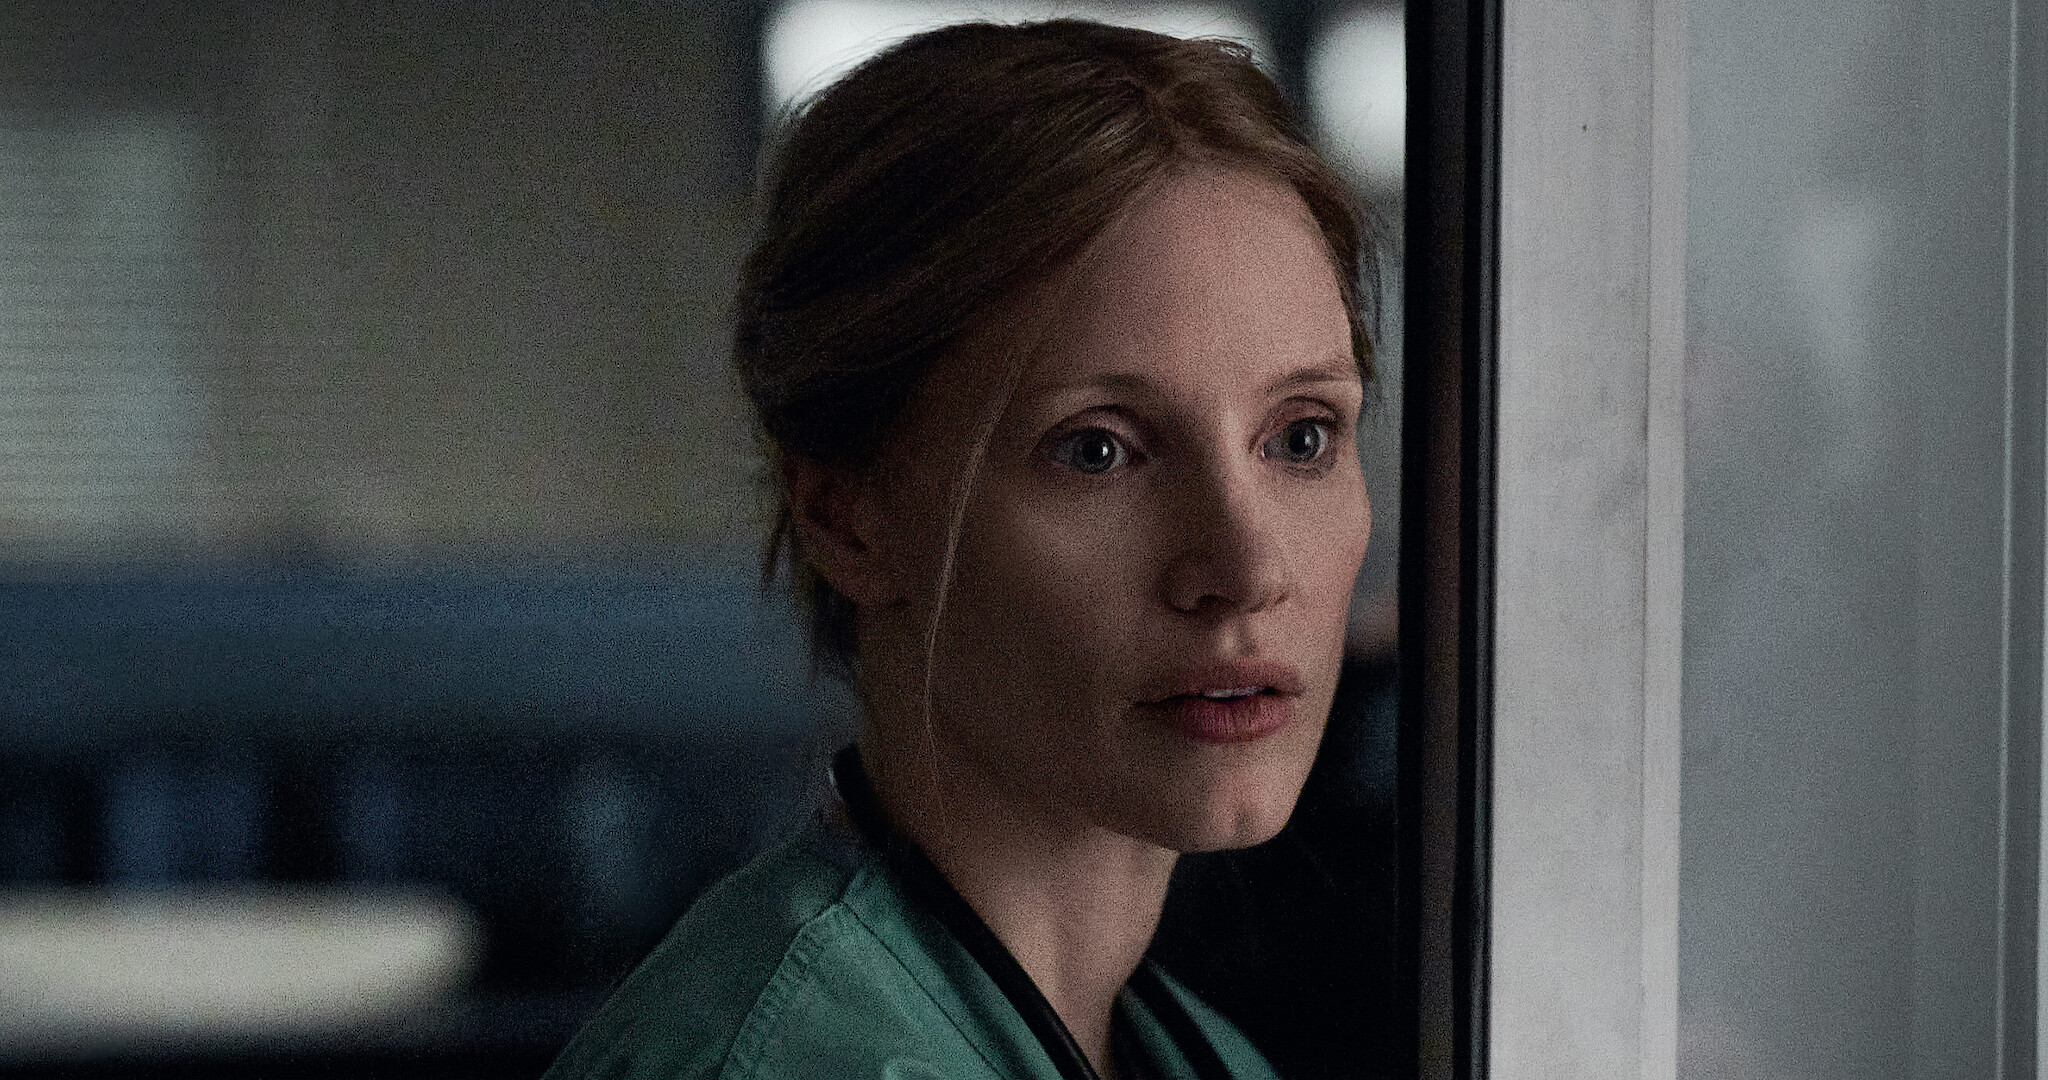 Did I notice a dark side?': the true story behind serial killer drama The  Good Nurse, Movies